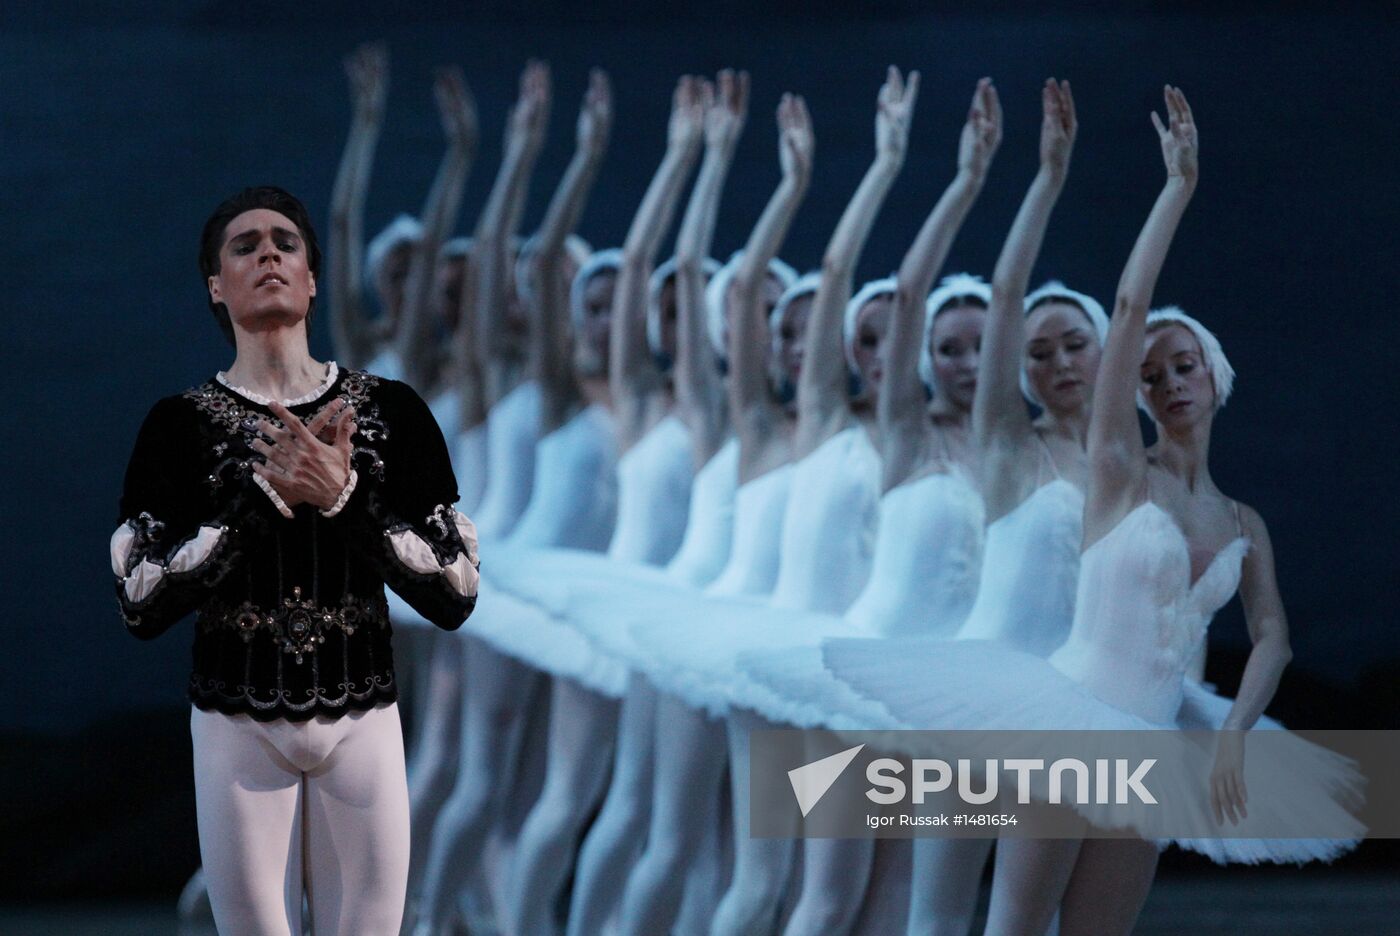 Rehearsal of Swan Lake ballet's 3D broadcast